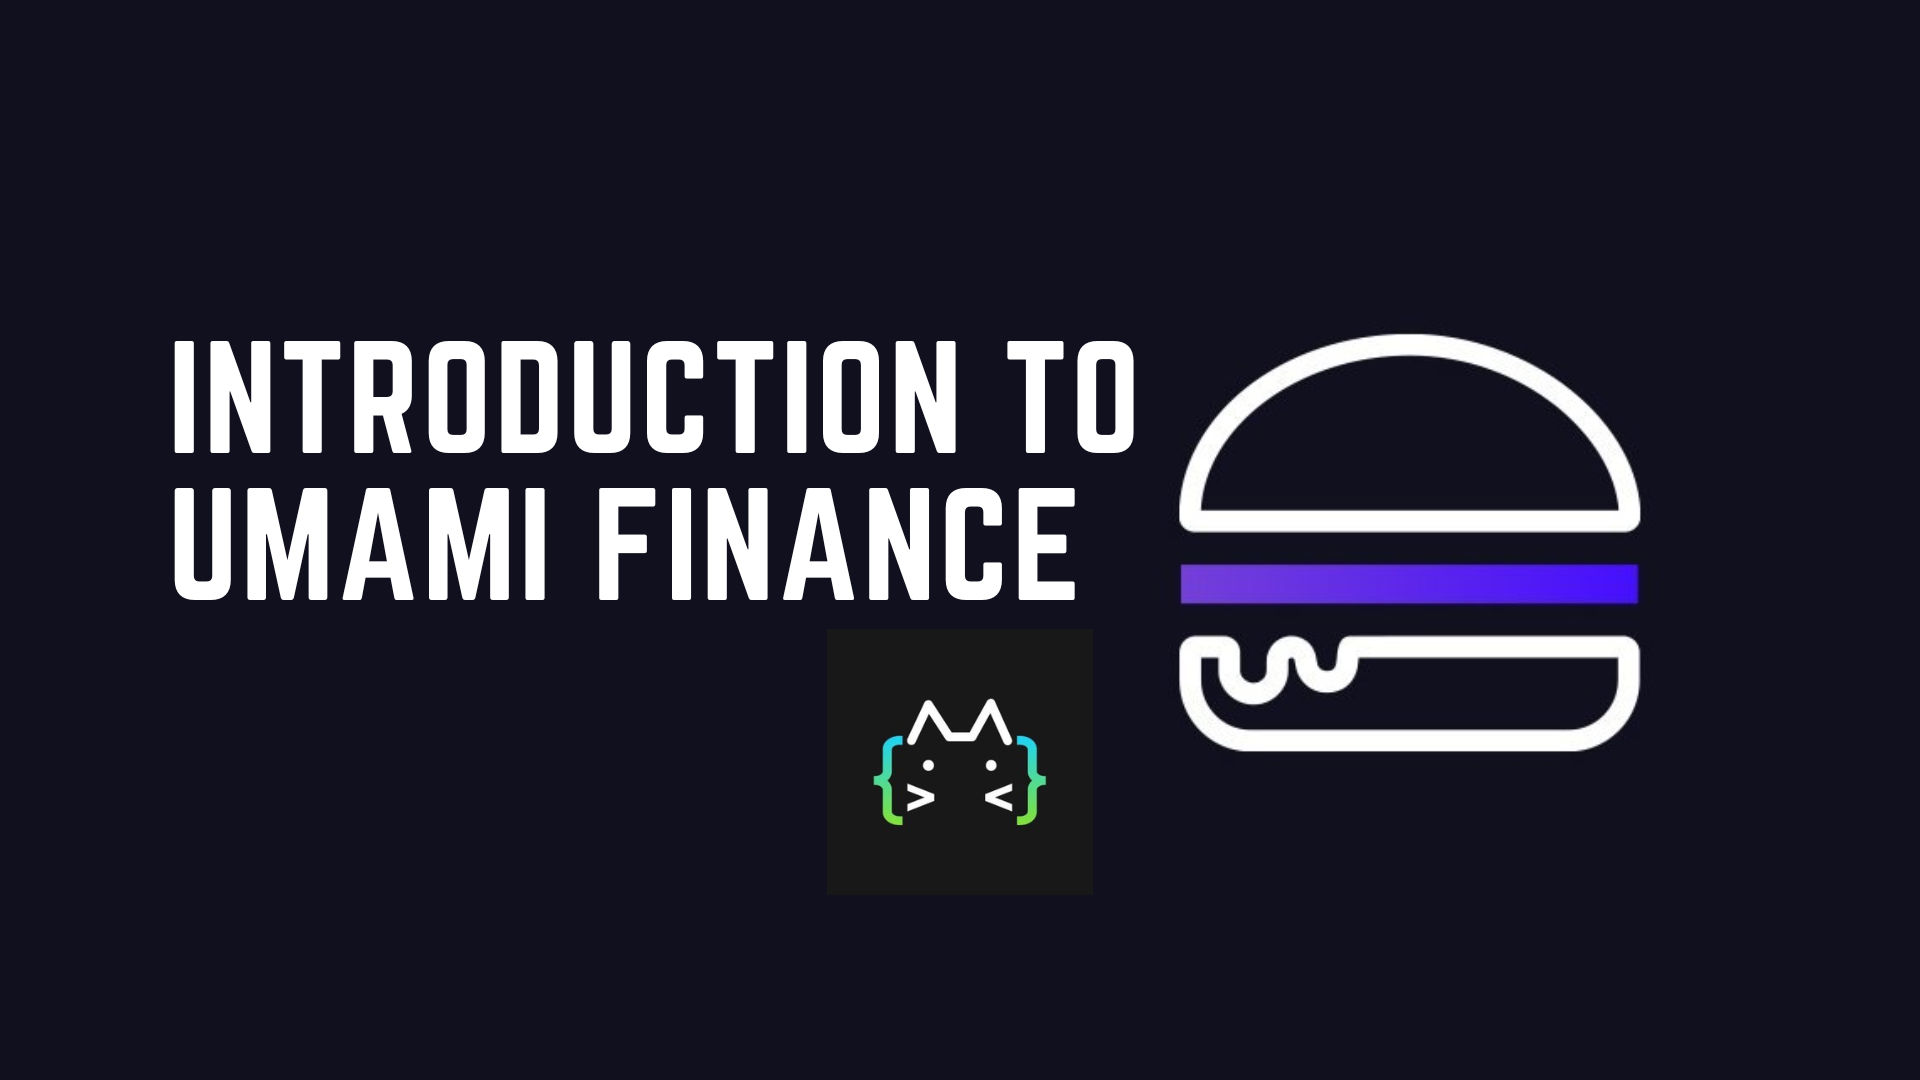 Introduction to umami finance